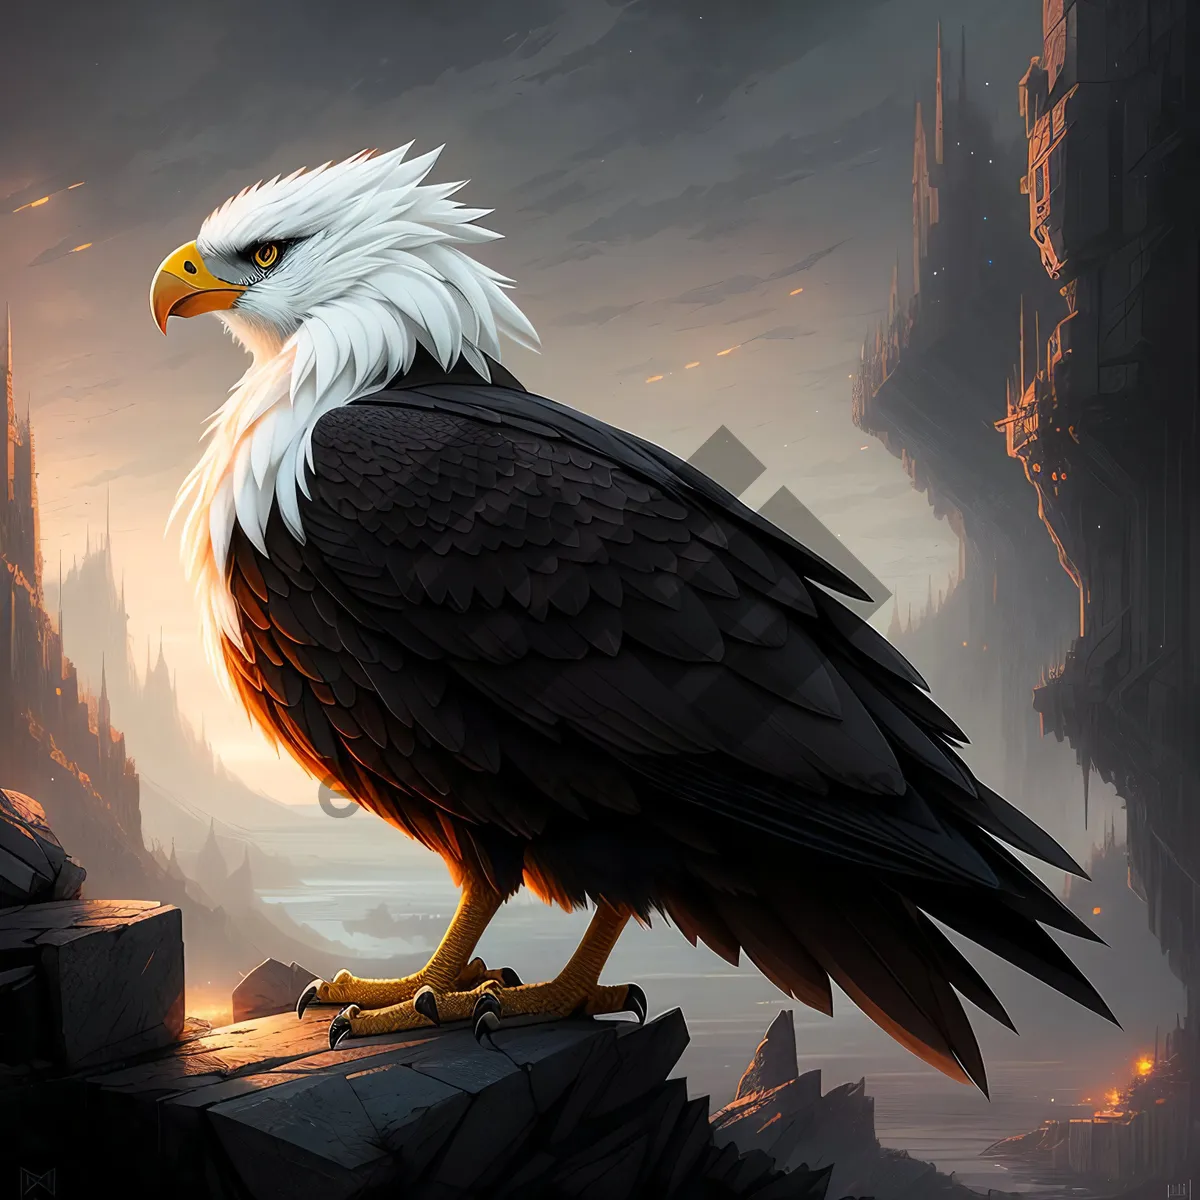 Picture of Exquisite Predator: Majestic Bald Eagle in Flight